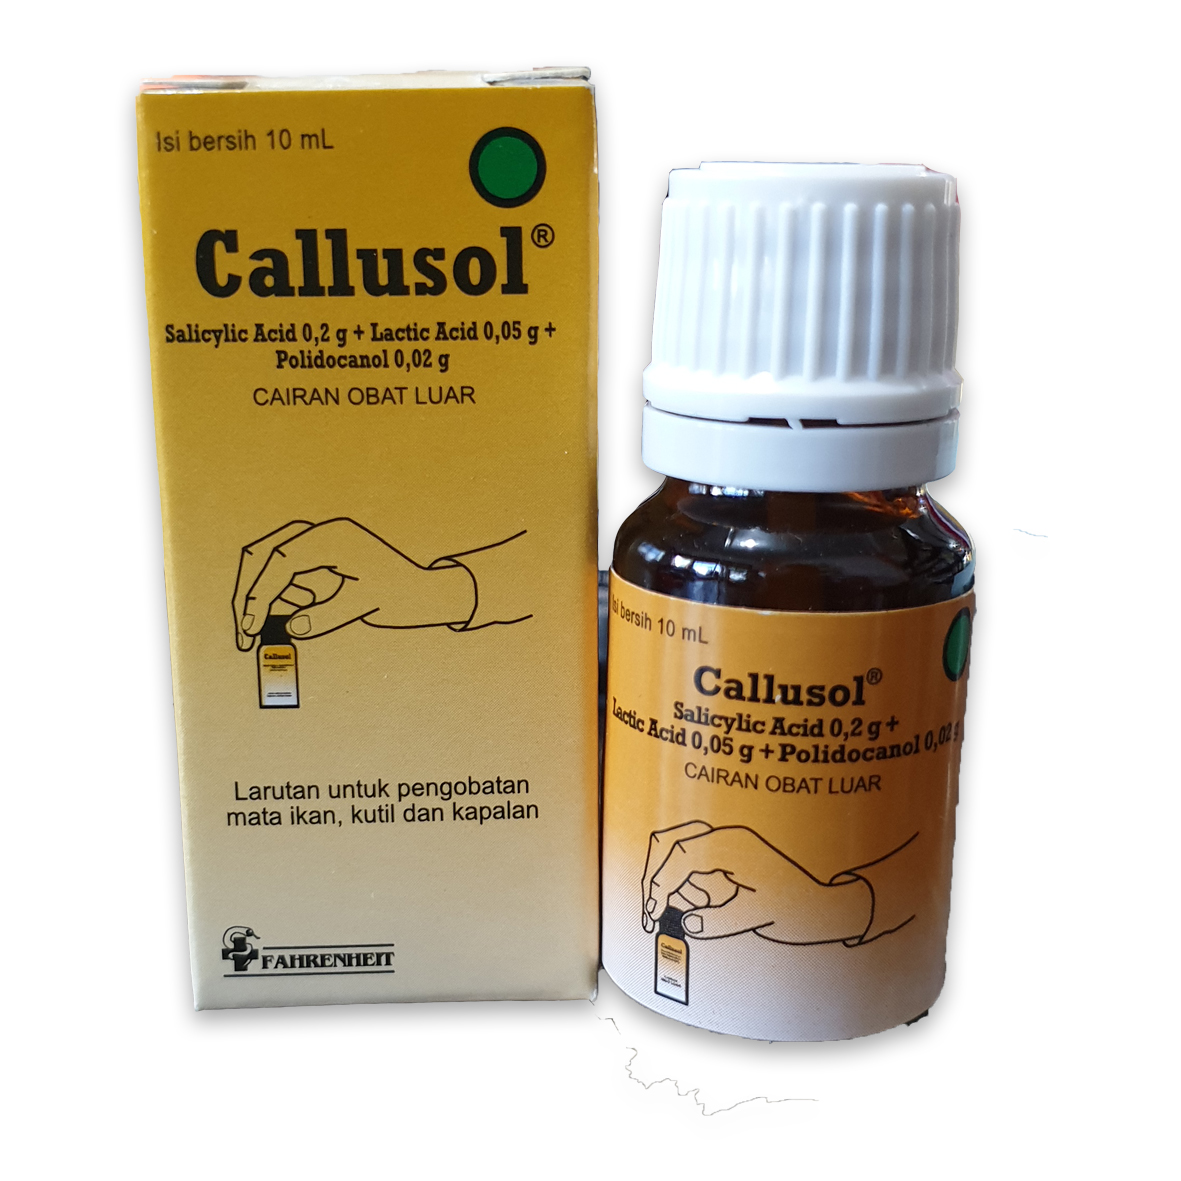 Callusol - Treat Eyelets, Callus, Hardened Skin, and Warts